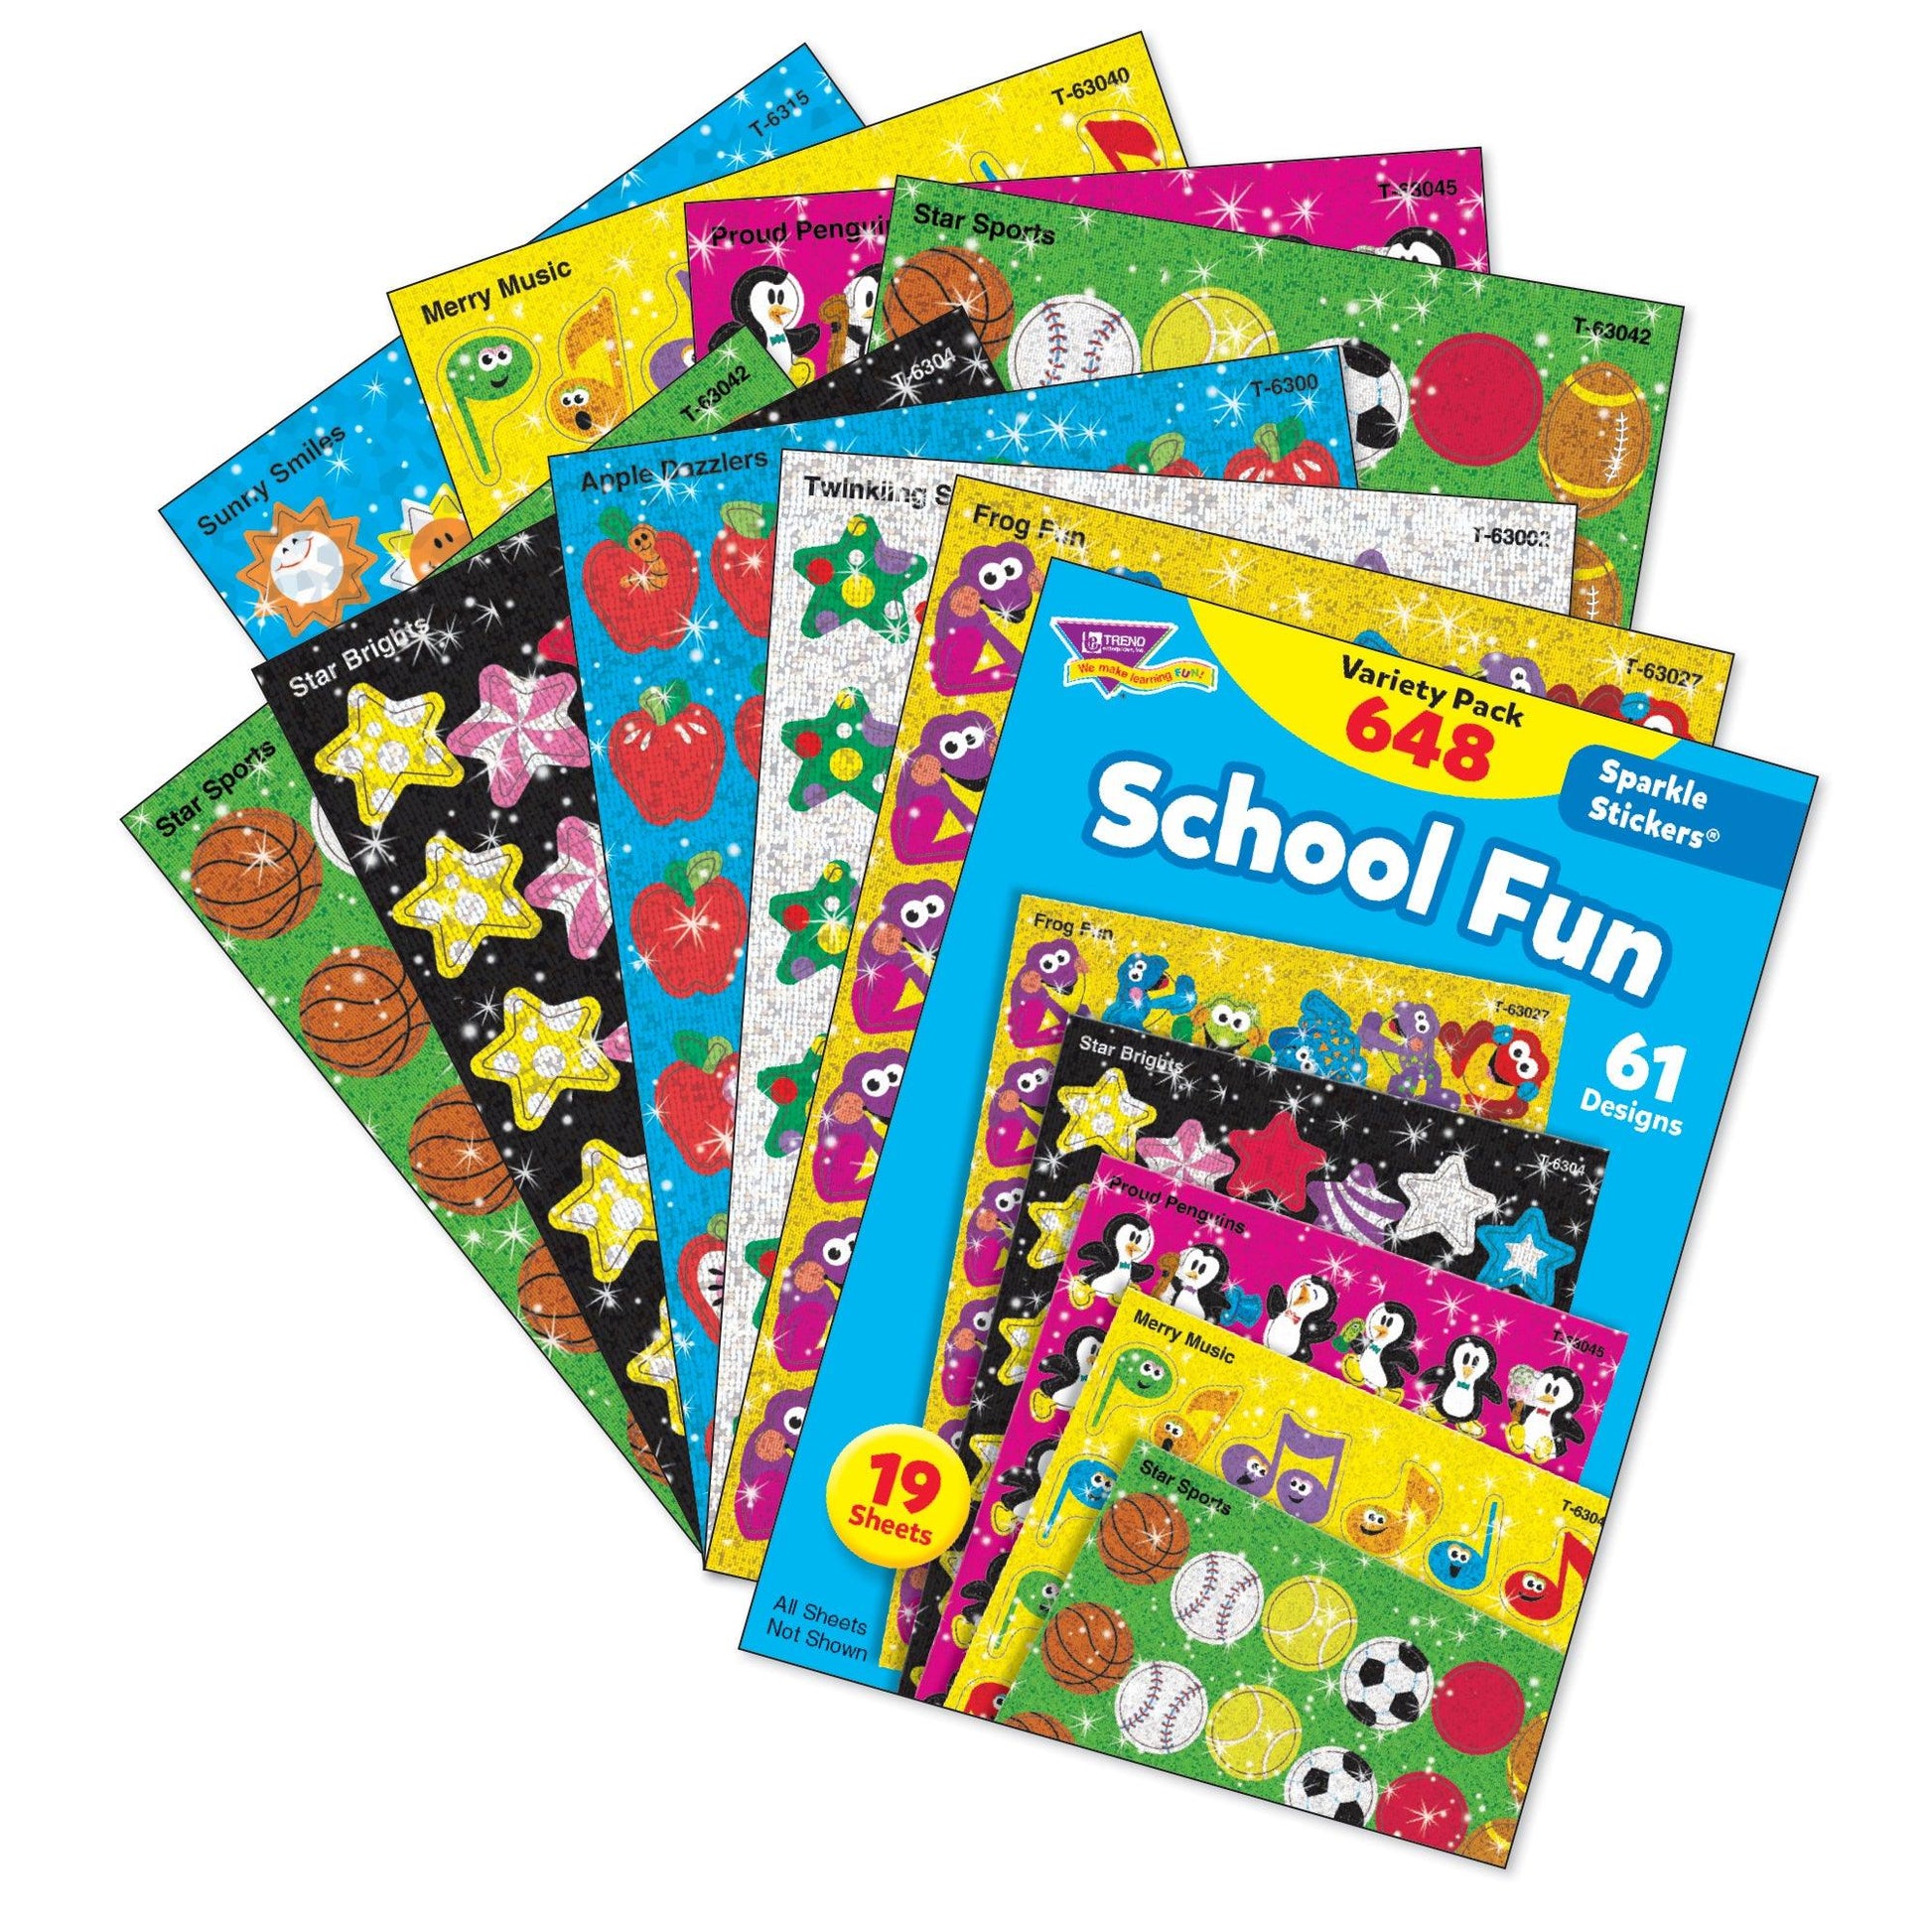 School Fun Sparkle Stickers® Variety Pack, 648 Per Pack, 2 Packs - Loomini